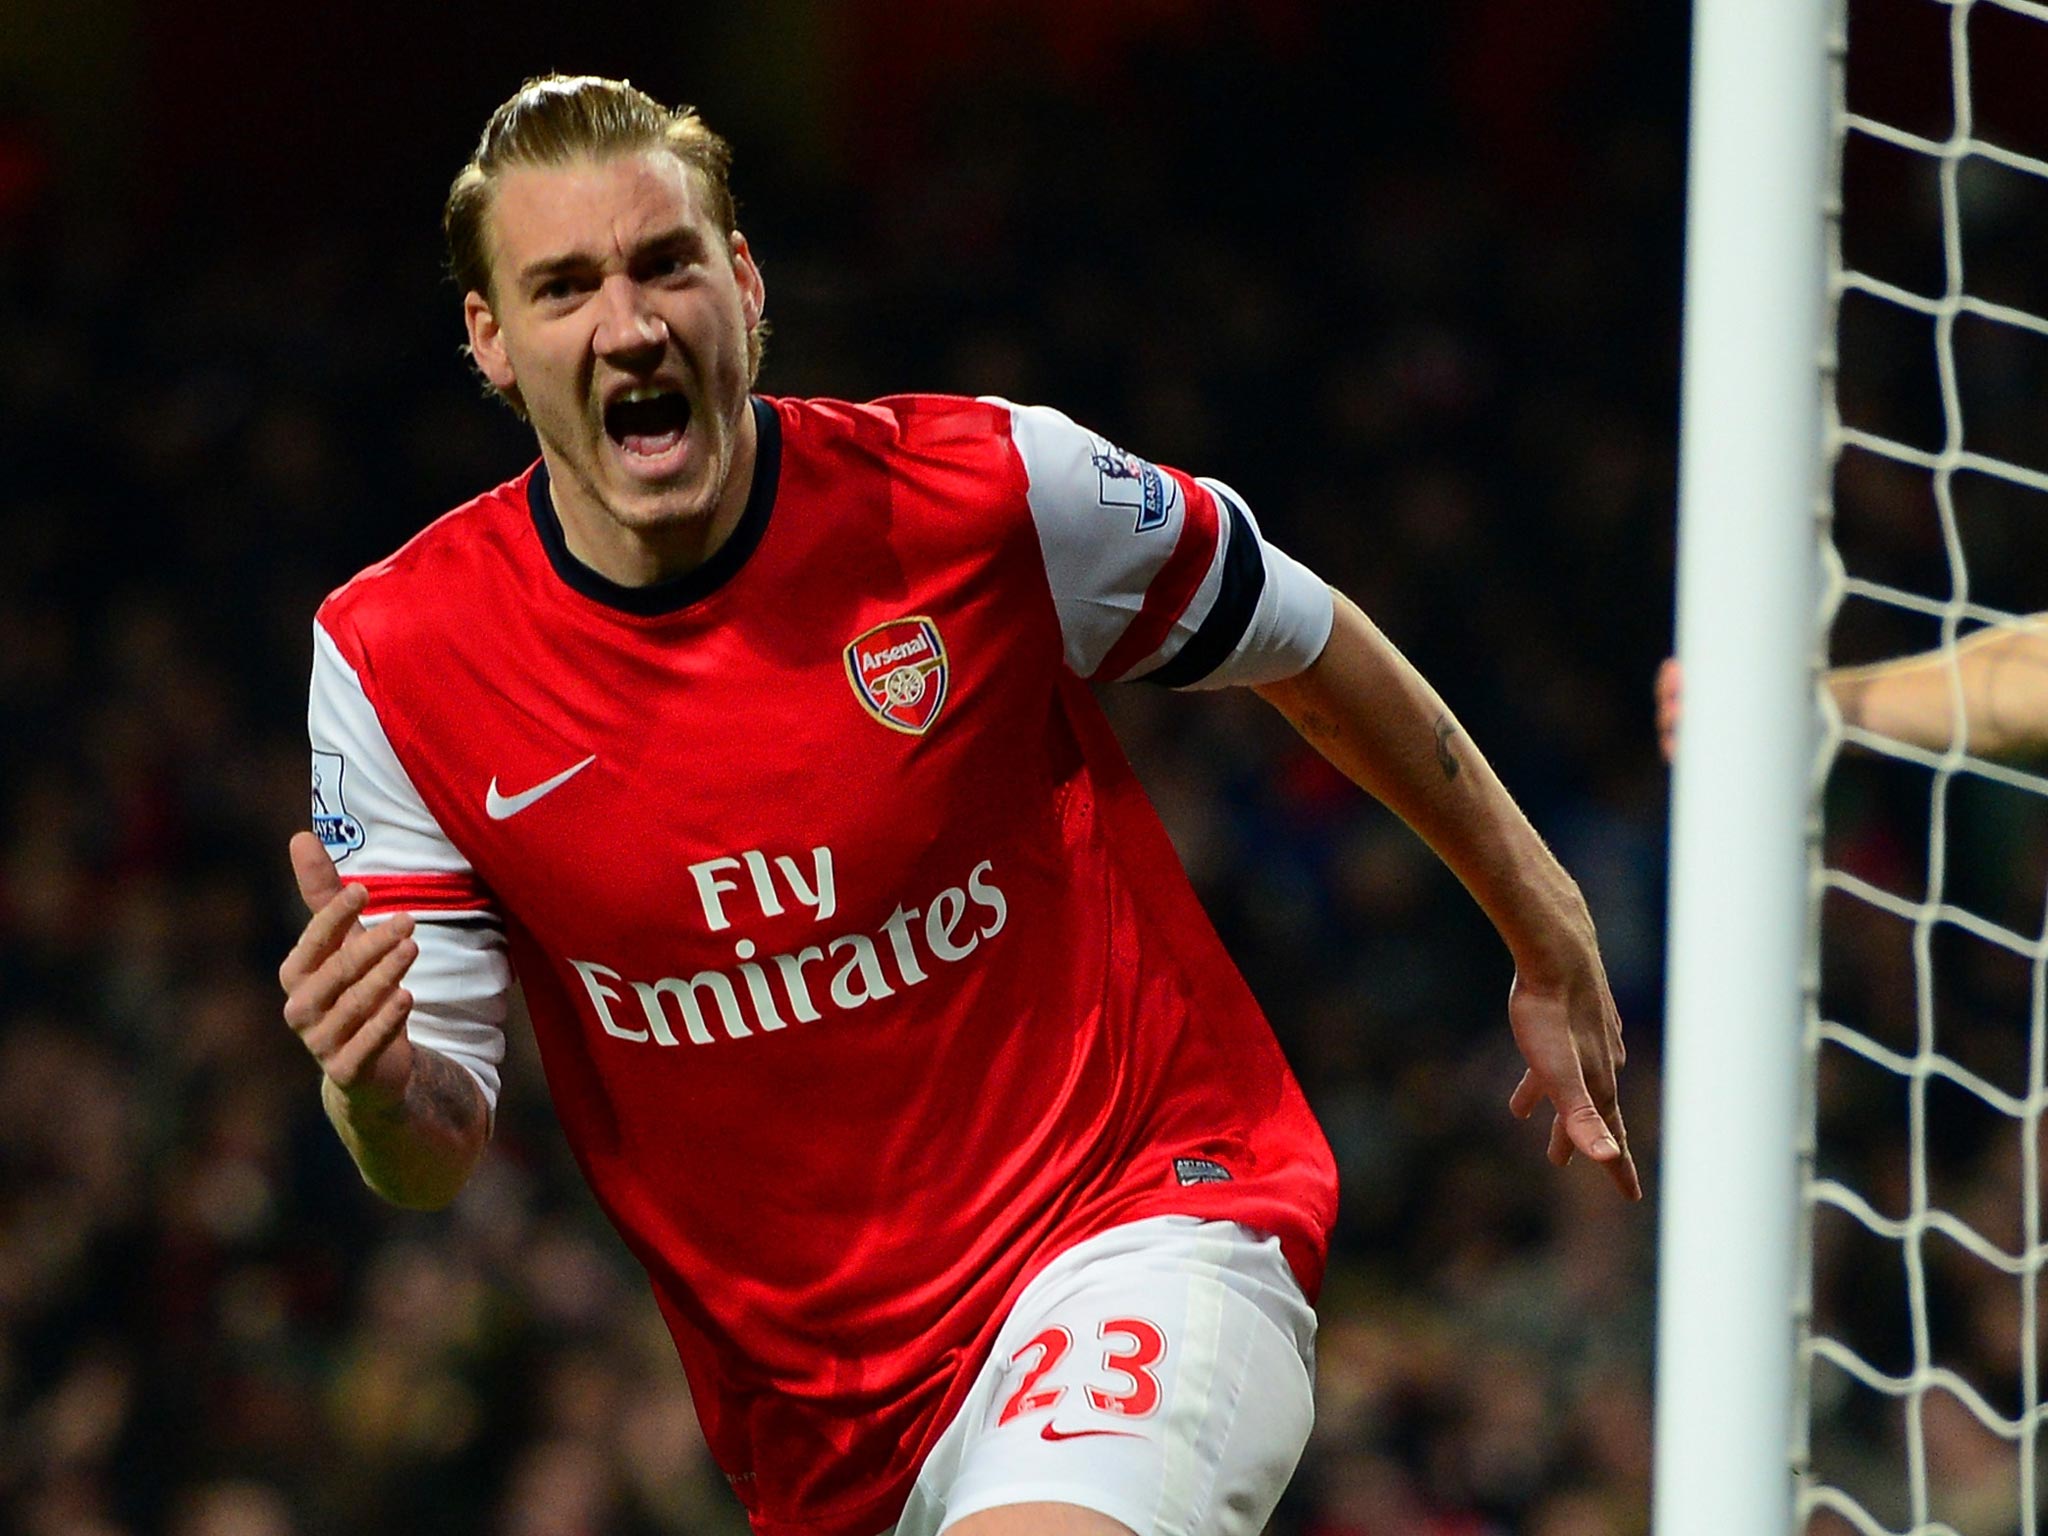 Nicklas Bendtner celebrates a goal for Arsenal in the real world